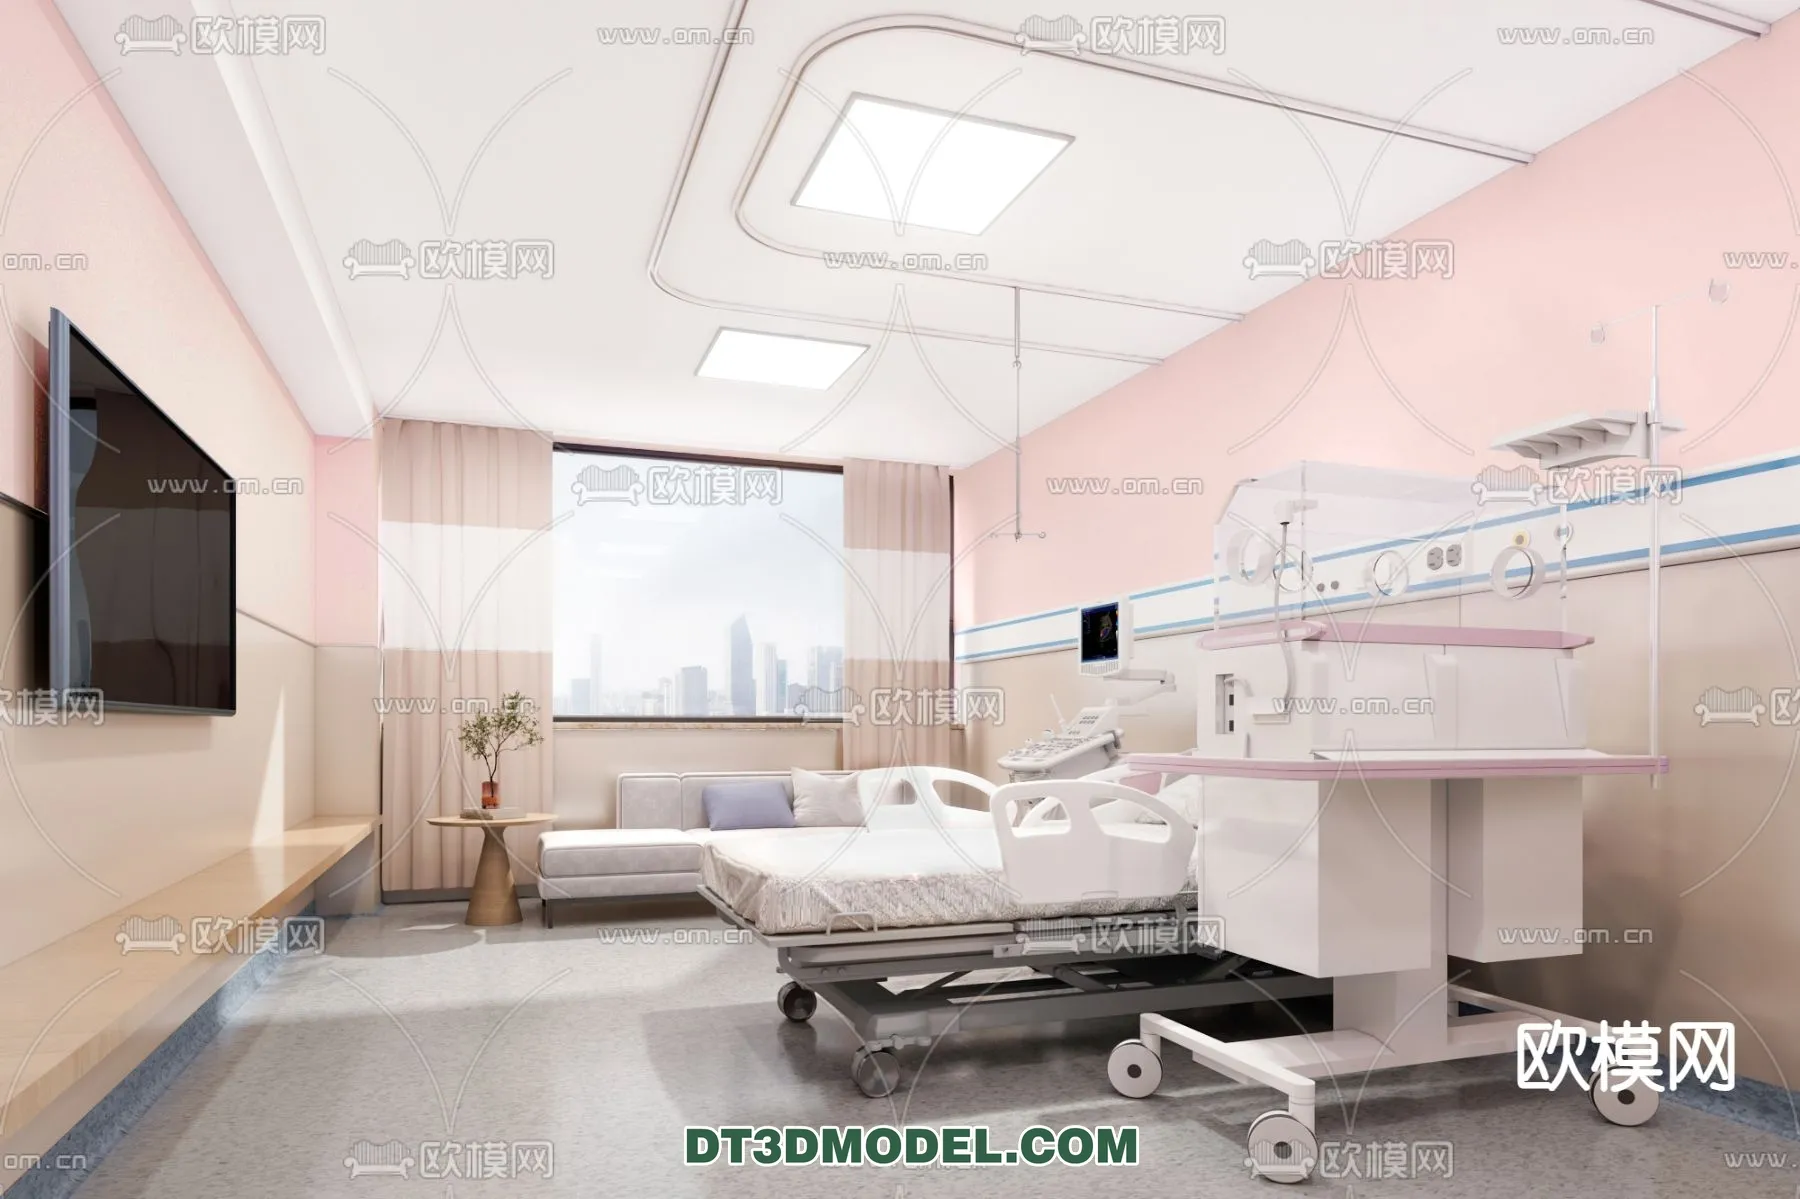 HOSPITAL 3D SCENES – MODERN – 0139